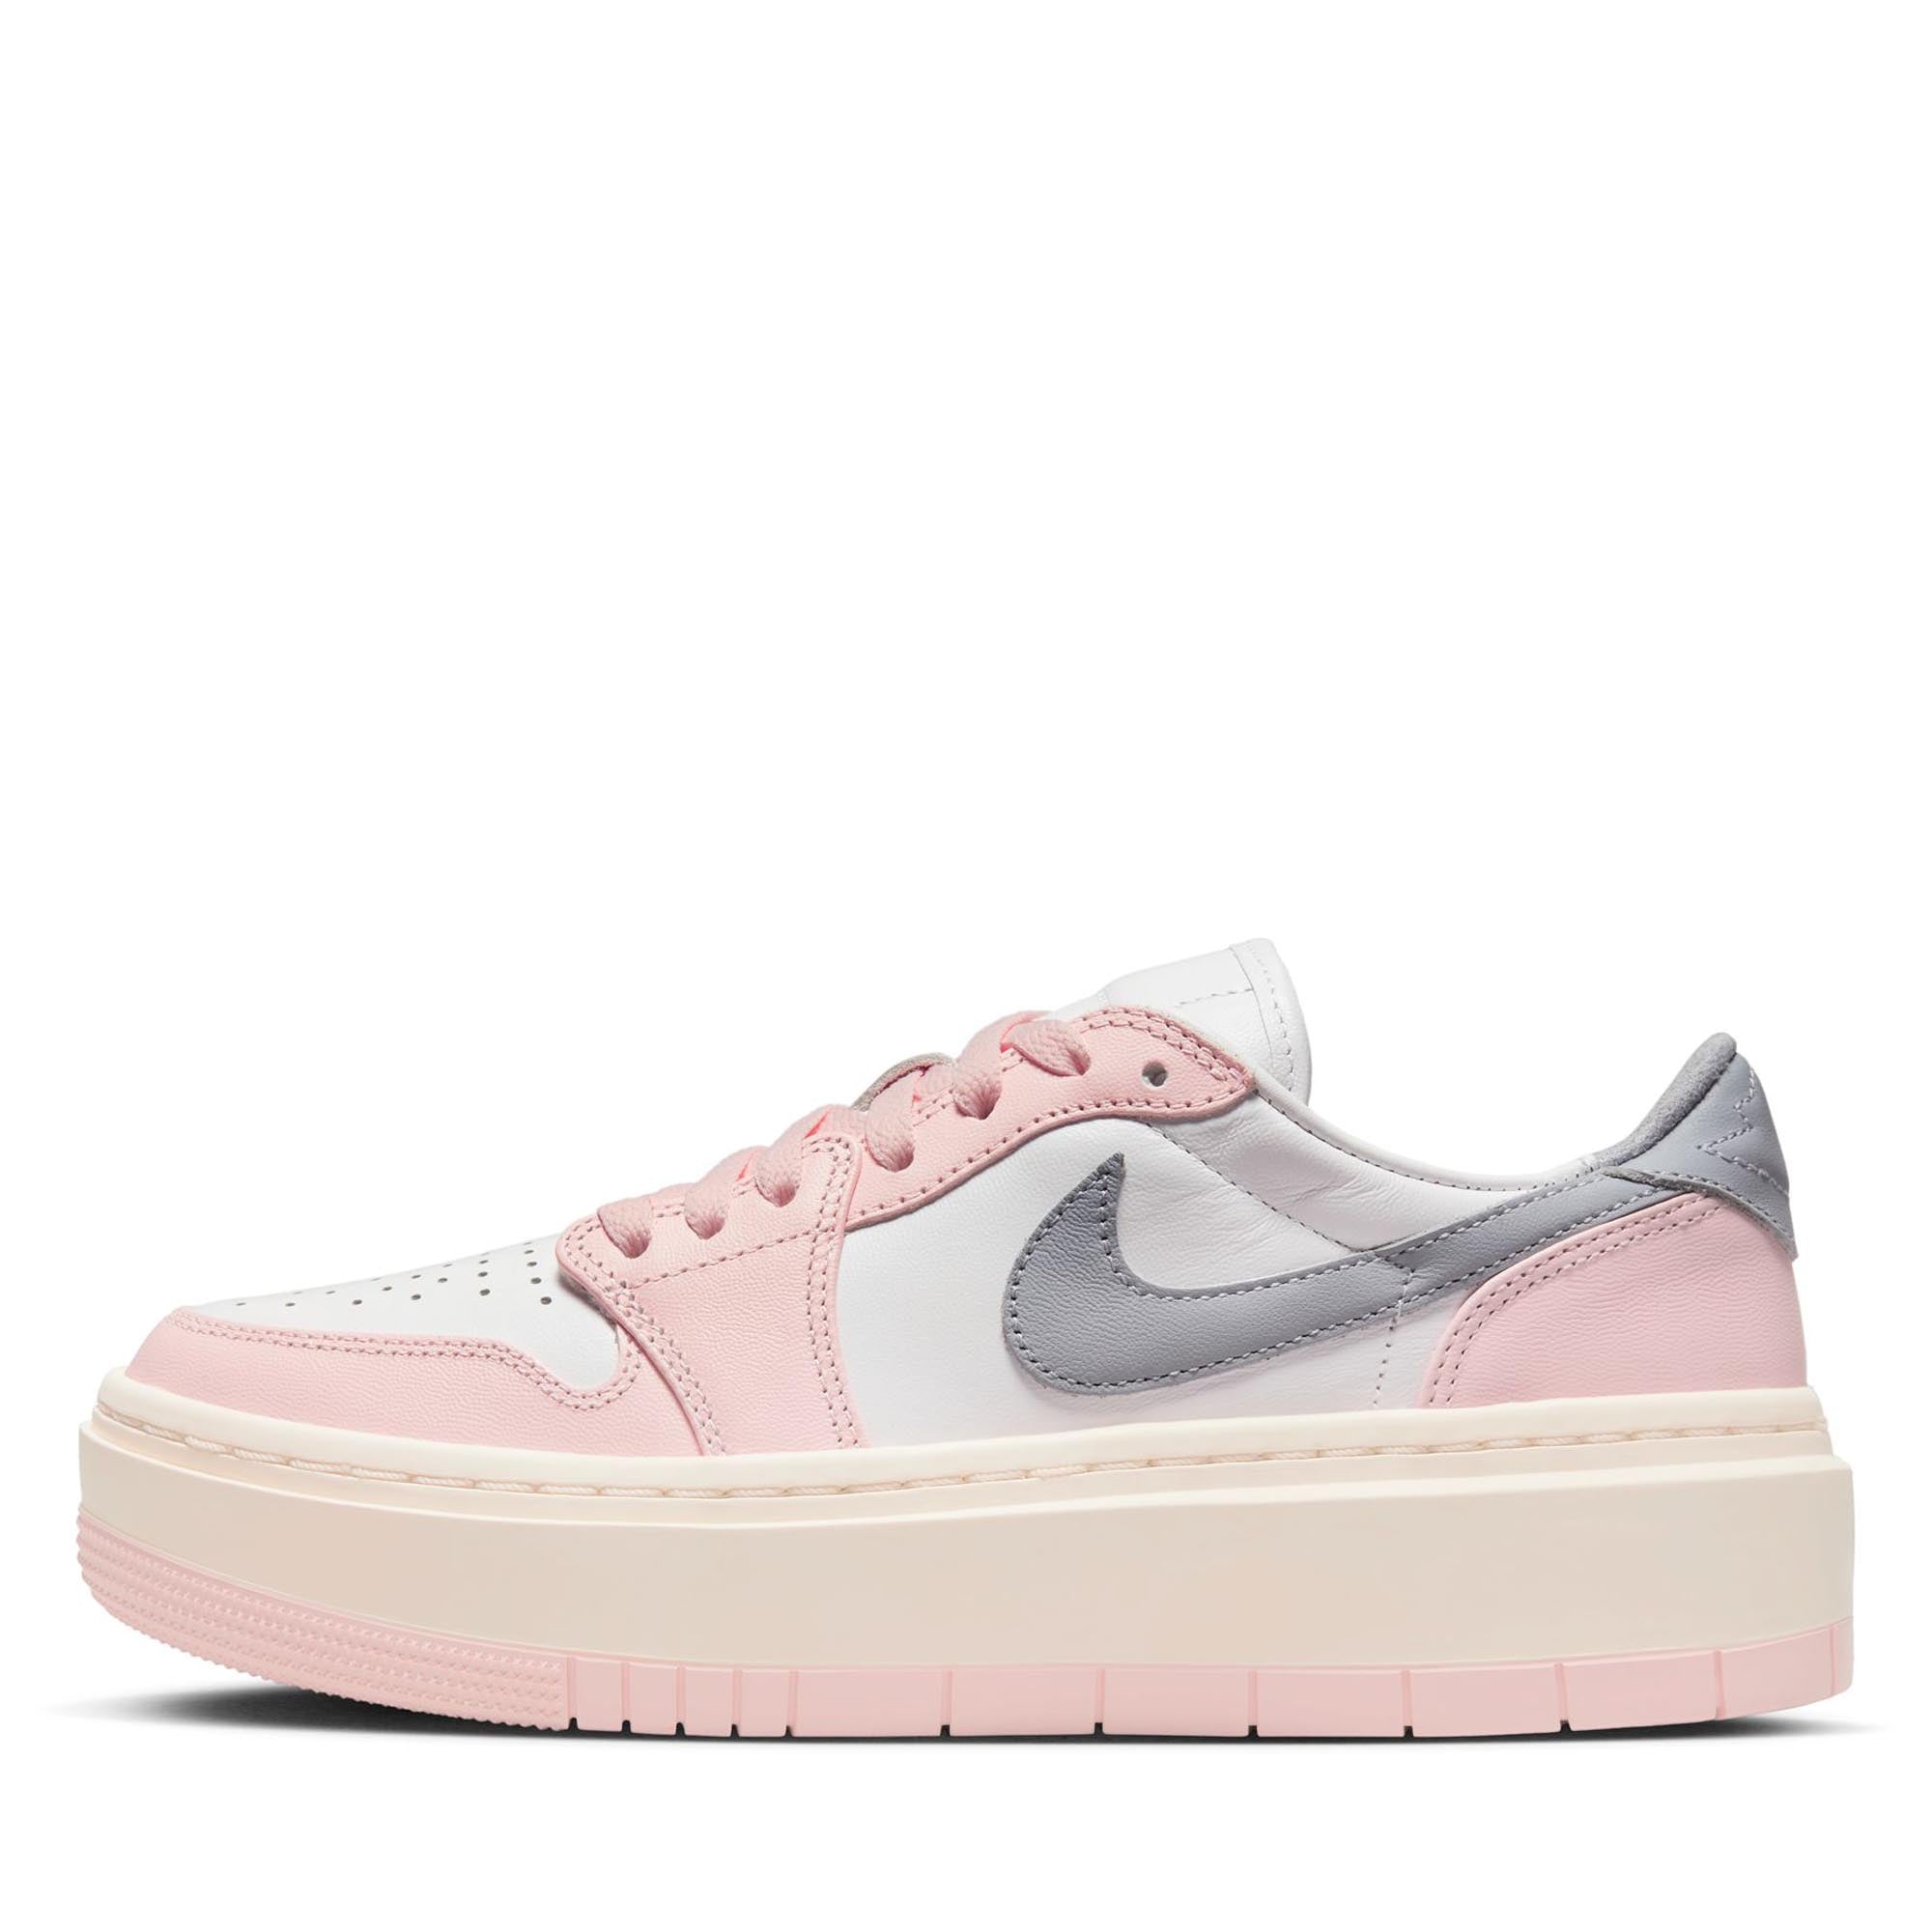 Nike WMNS Air Jordan 1 Elevate Soft Pink